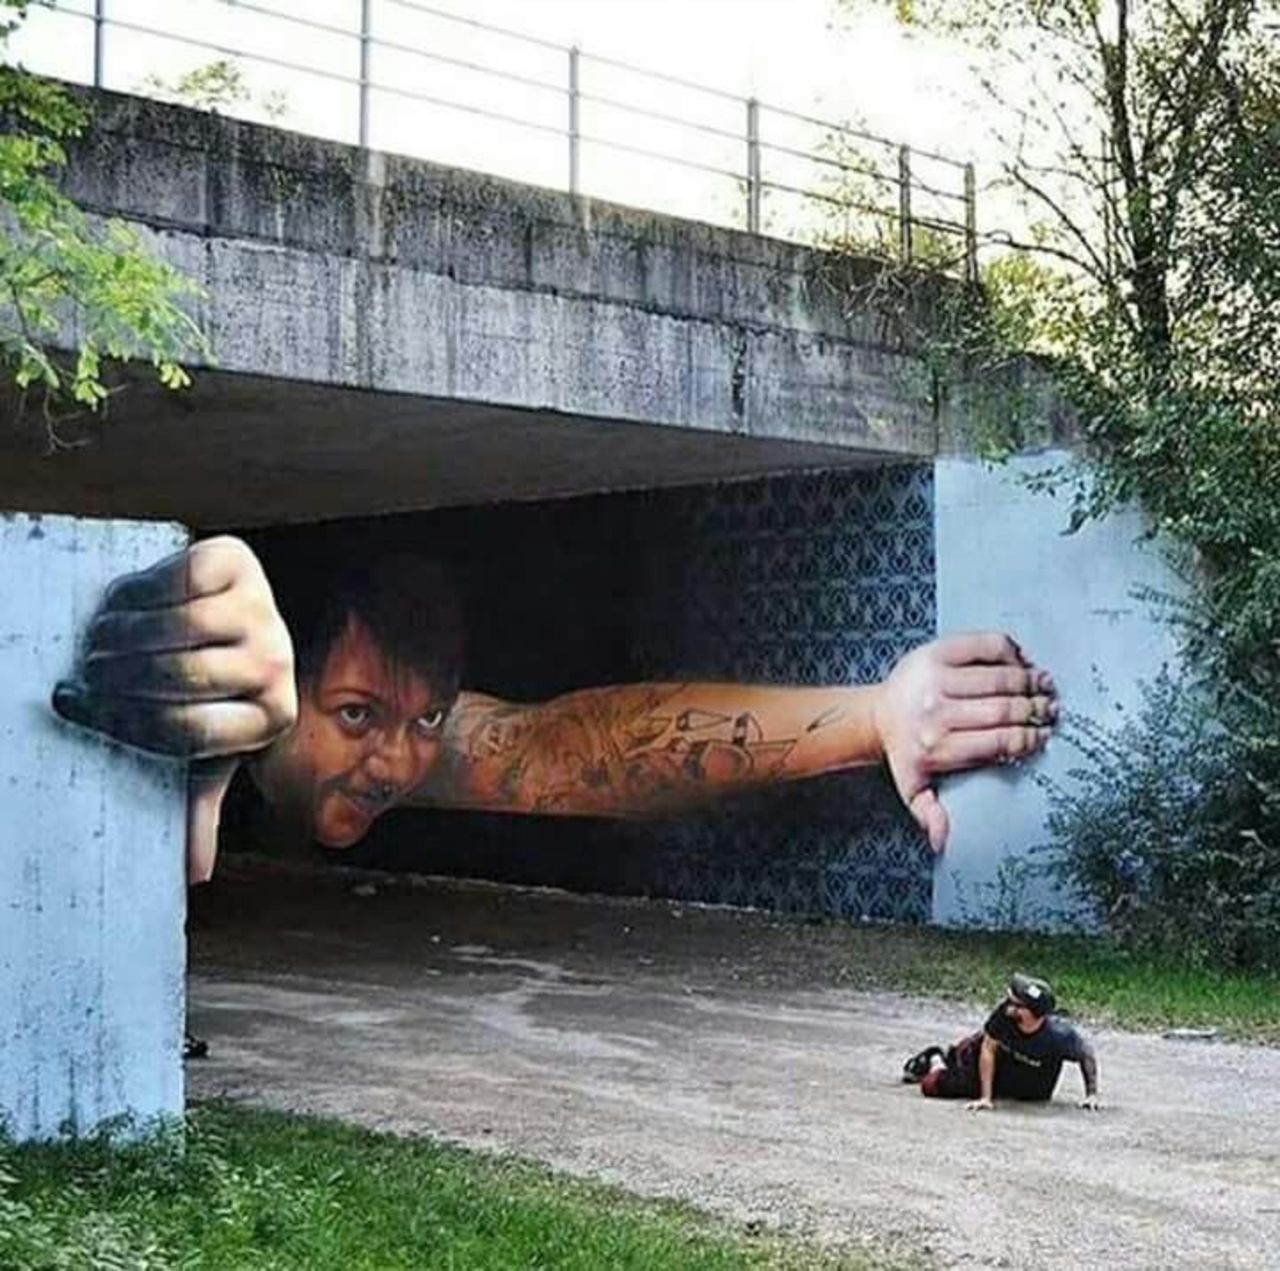 By Gman#streetart #mural #graffiti #art https://t.co/J2zzWyAIwN